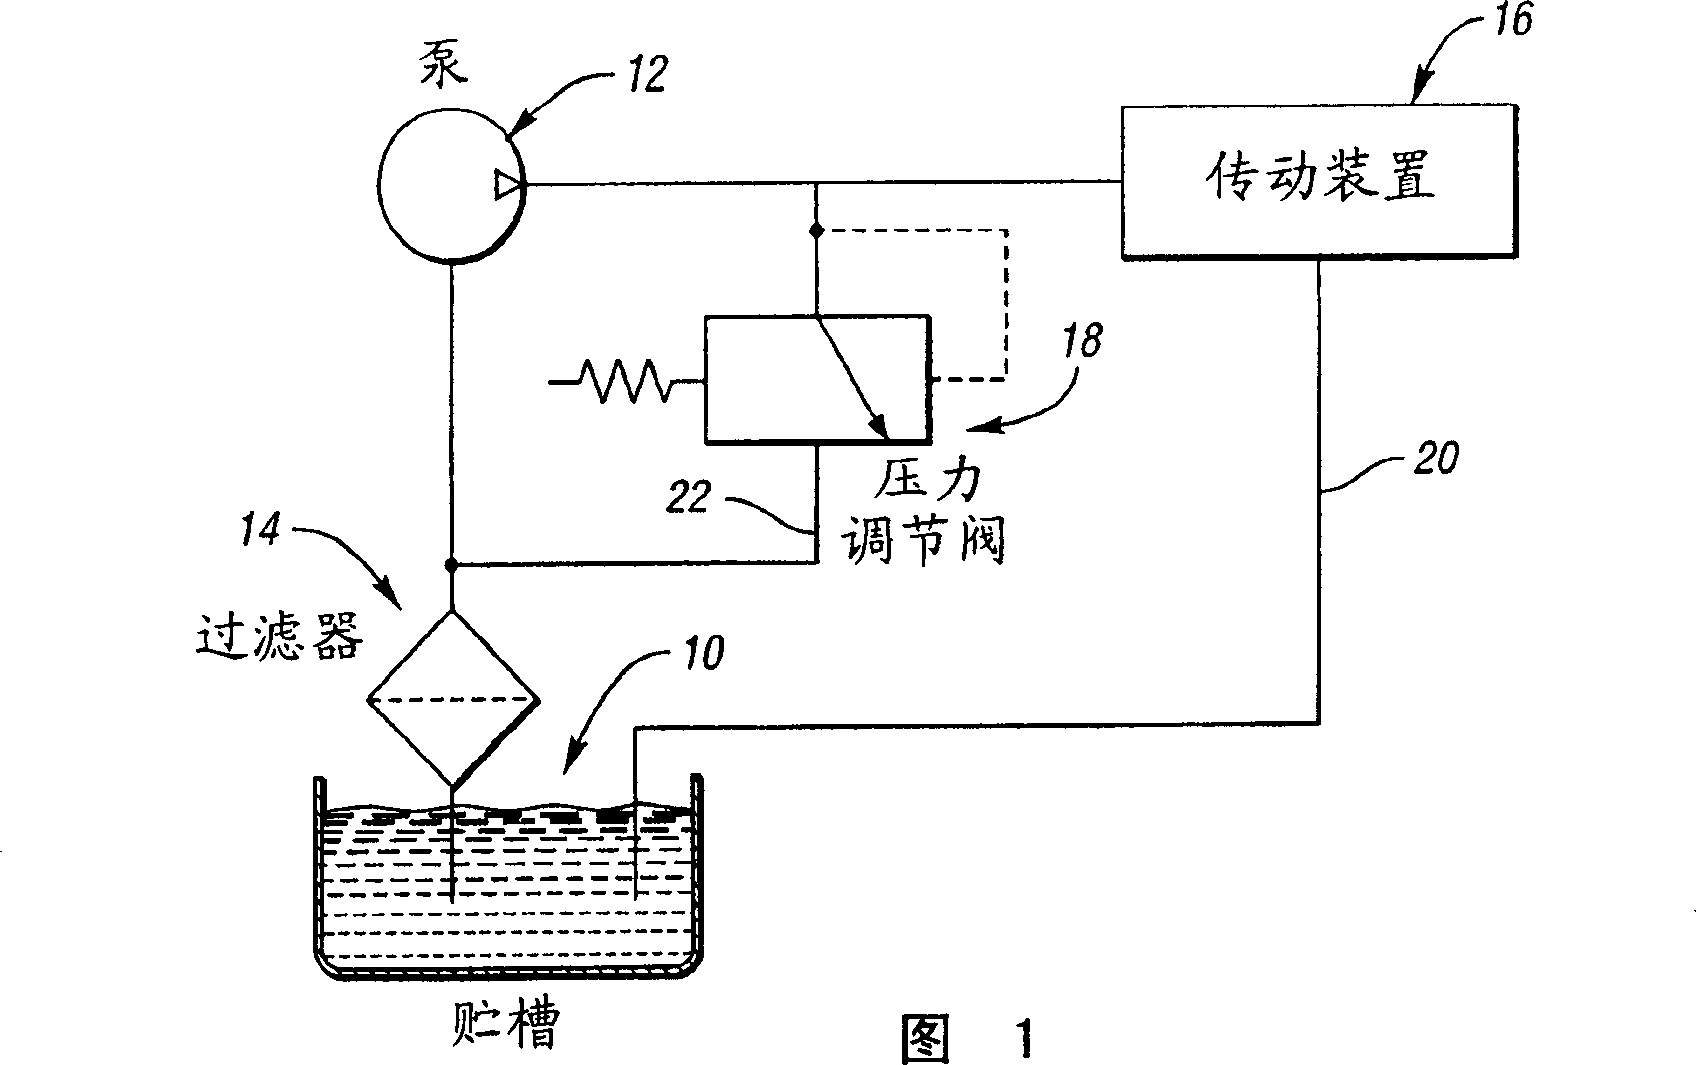 Transmission pump and filter